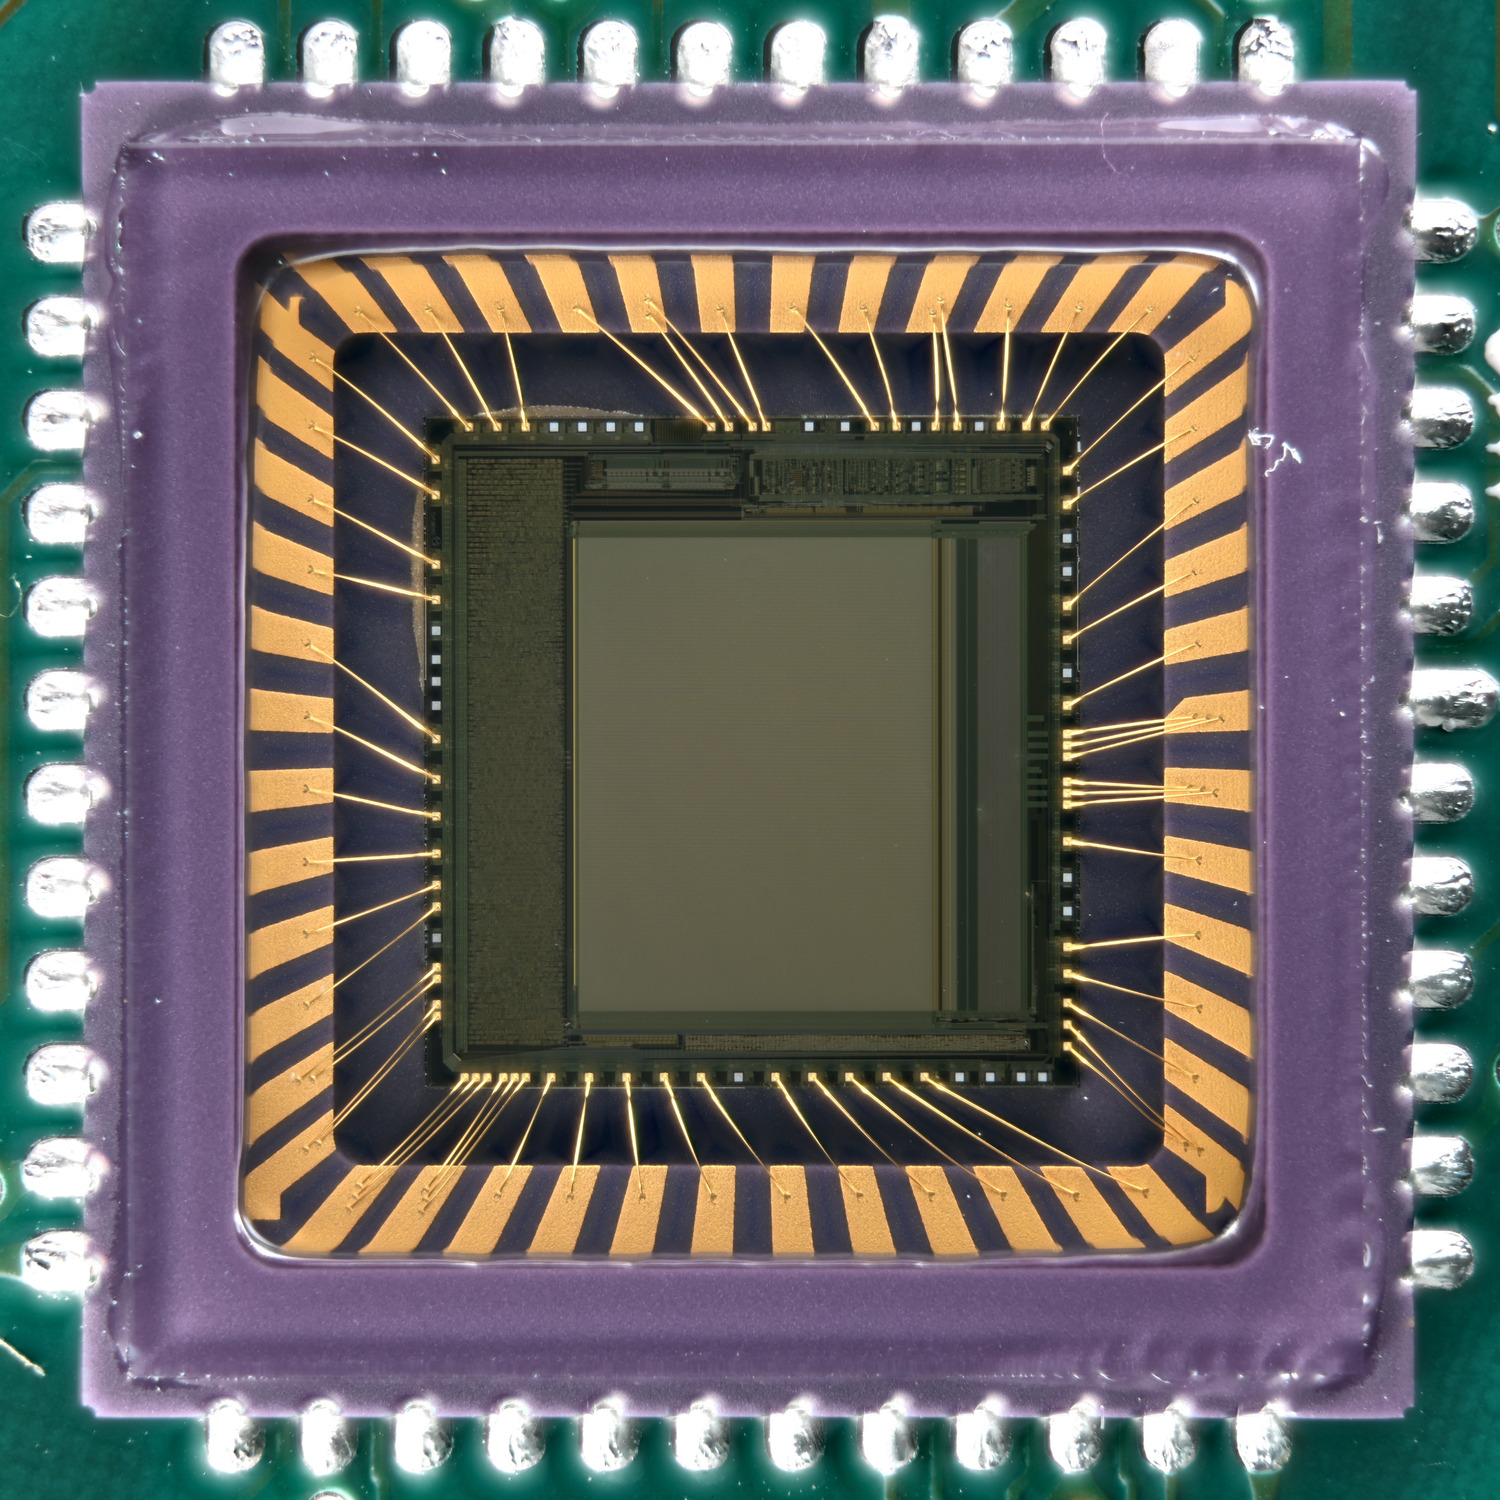 OmniVision OV7120 CMOS Image Sensor close-up